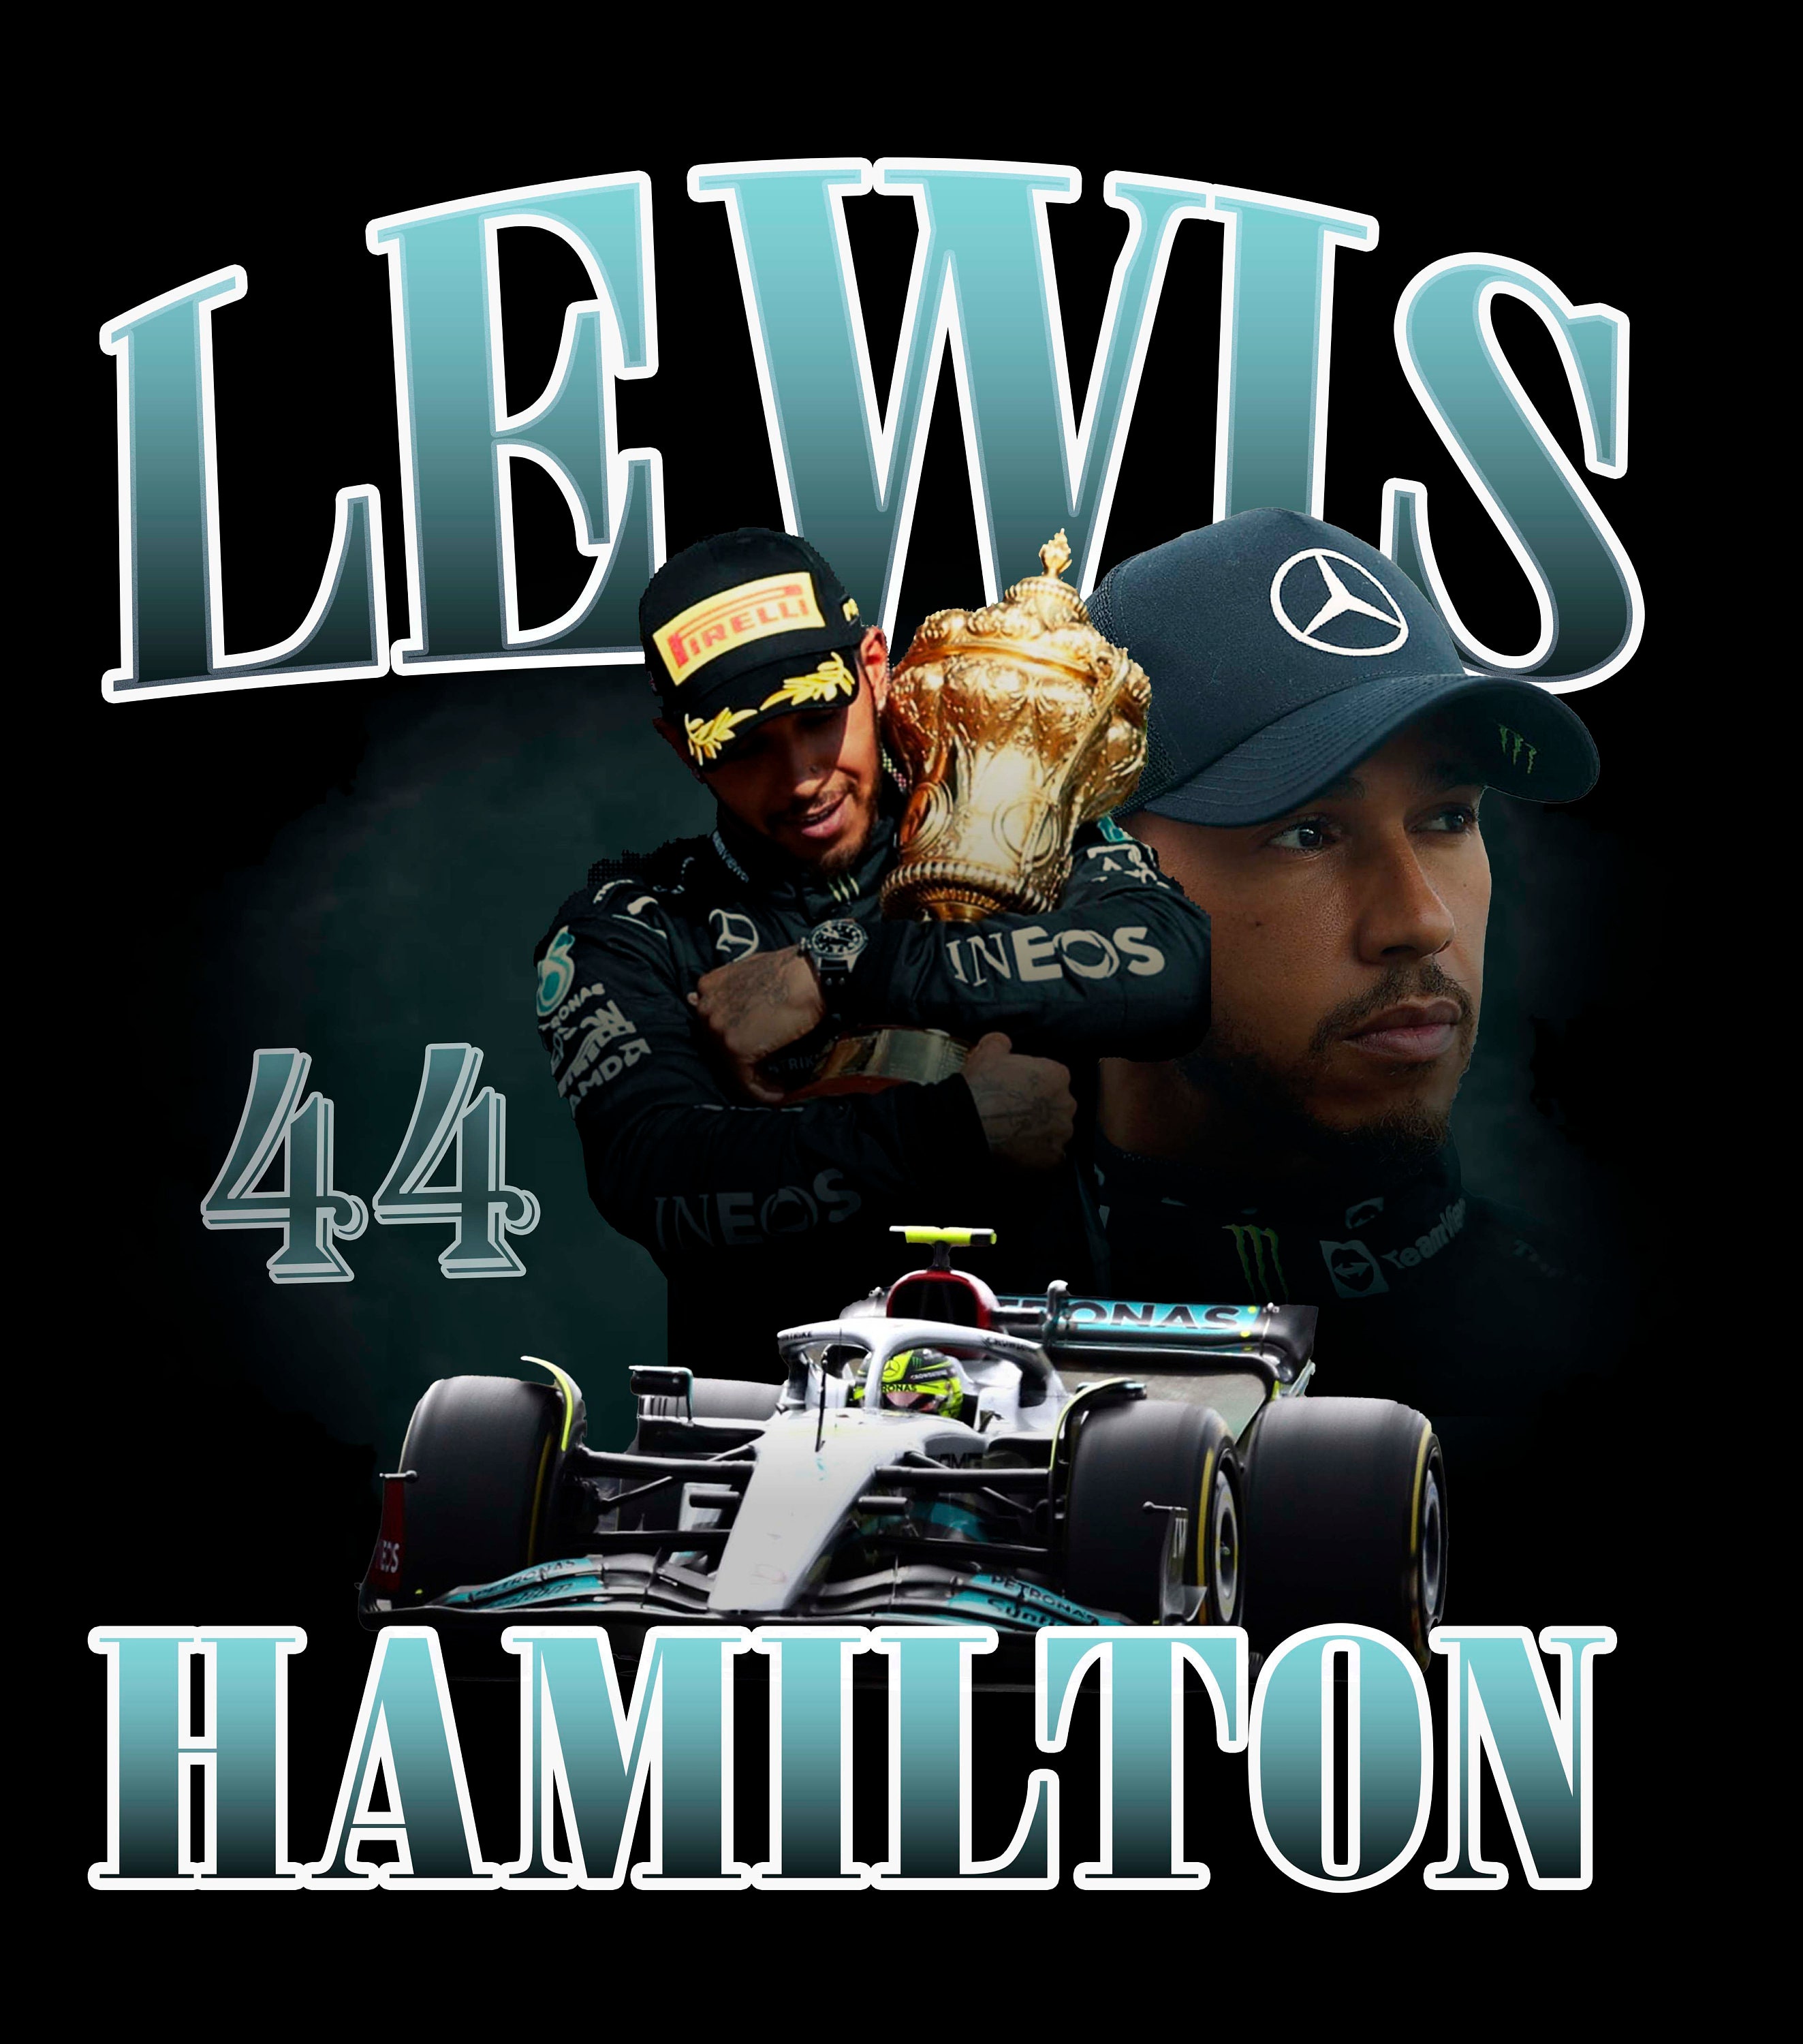 Lewis Hamilton 8 Time World Champion Home Decor Poster Canvas - REVER LAVIE